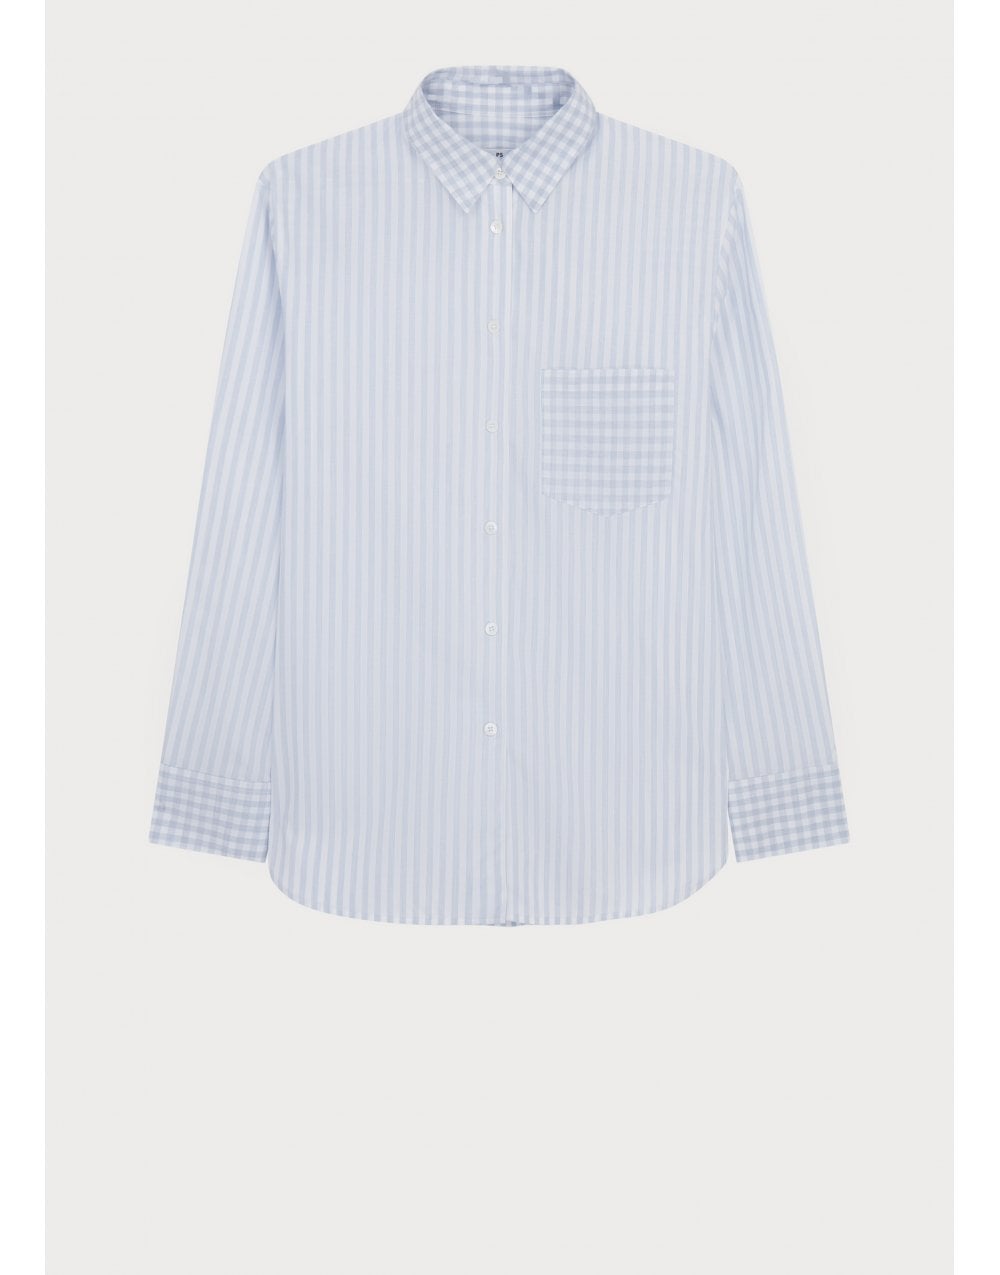 Paul Smith Paul Smith Check Stripe Two Tone Long Sleeve Shirt Col: 01 White, Size